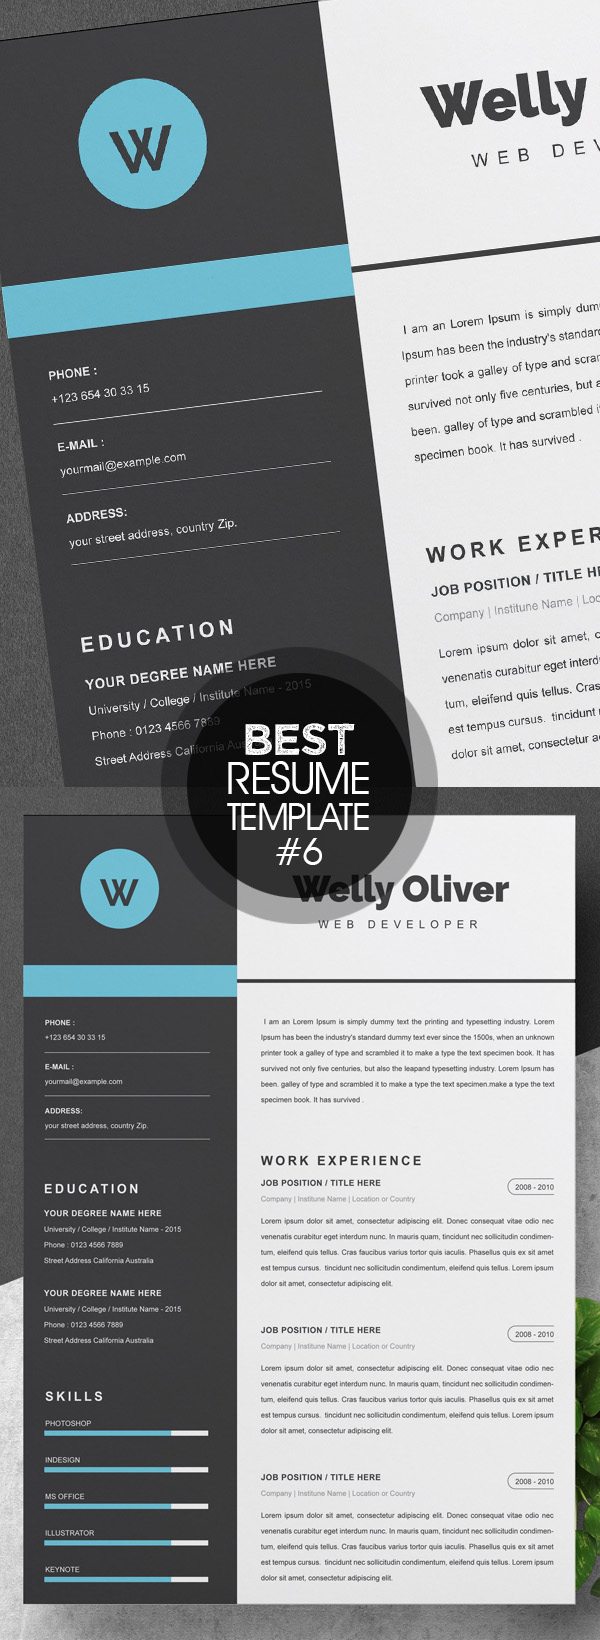 Word CV Template | Resume Template